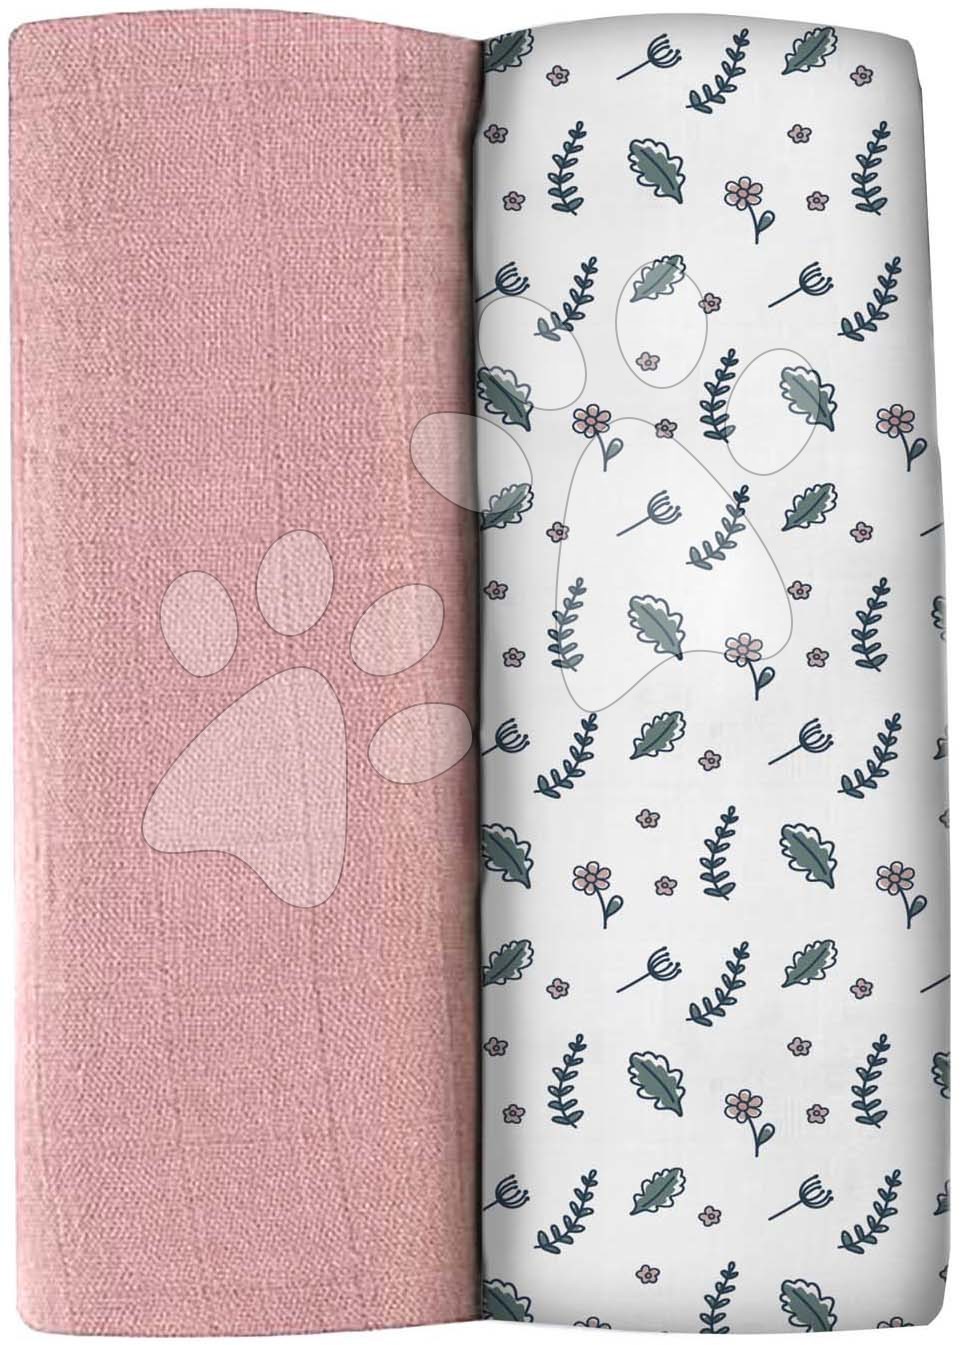 Textil pelenkák pamut muszlinból Bolte 2 Swadlles 120 cm Beaba Old Pink/Floral Campaign 2 darab 0 hó-tól